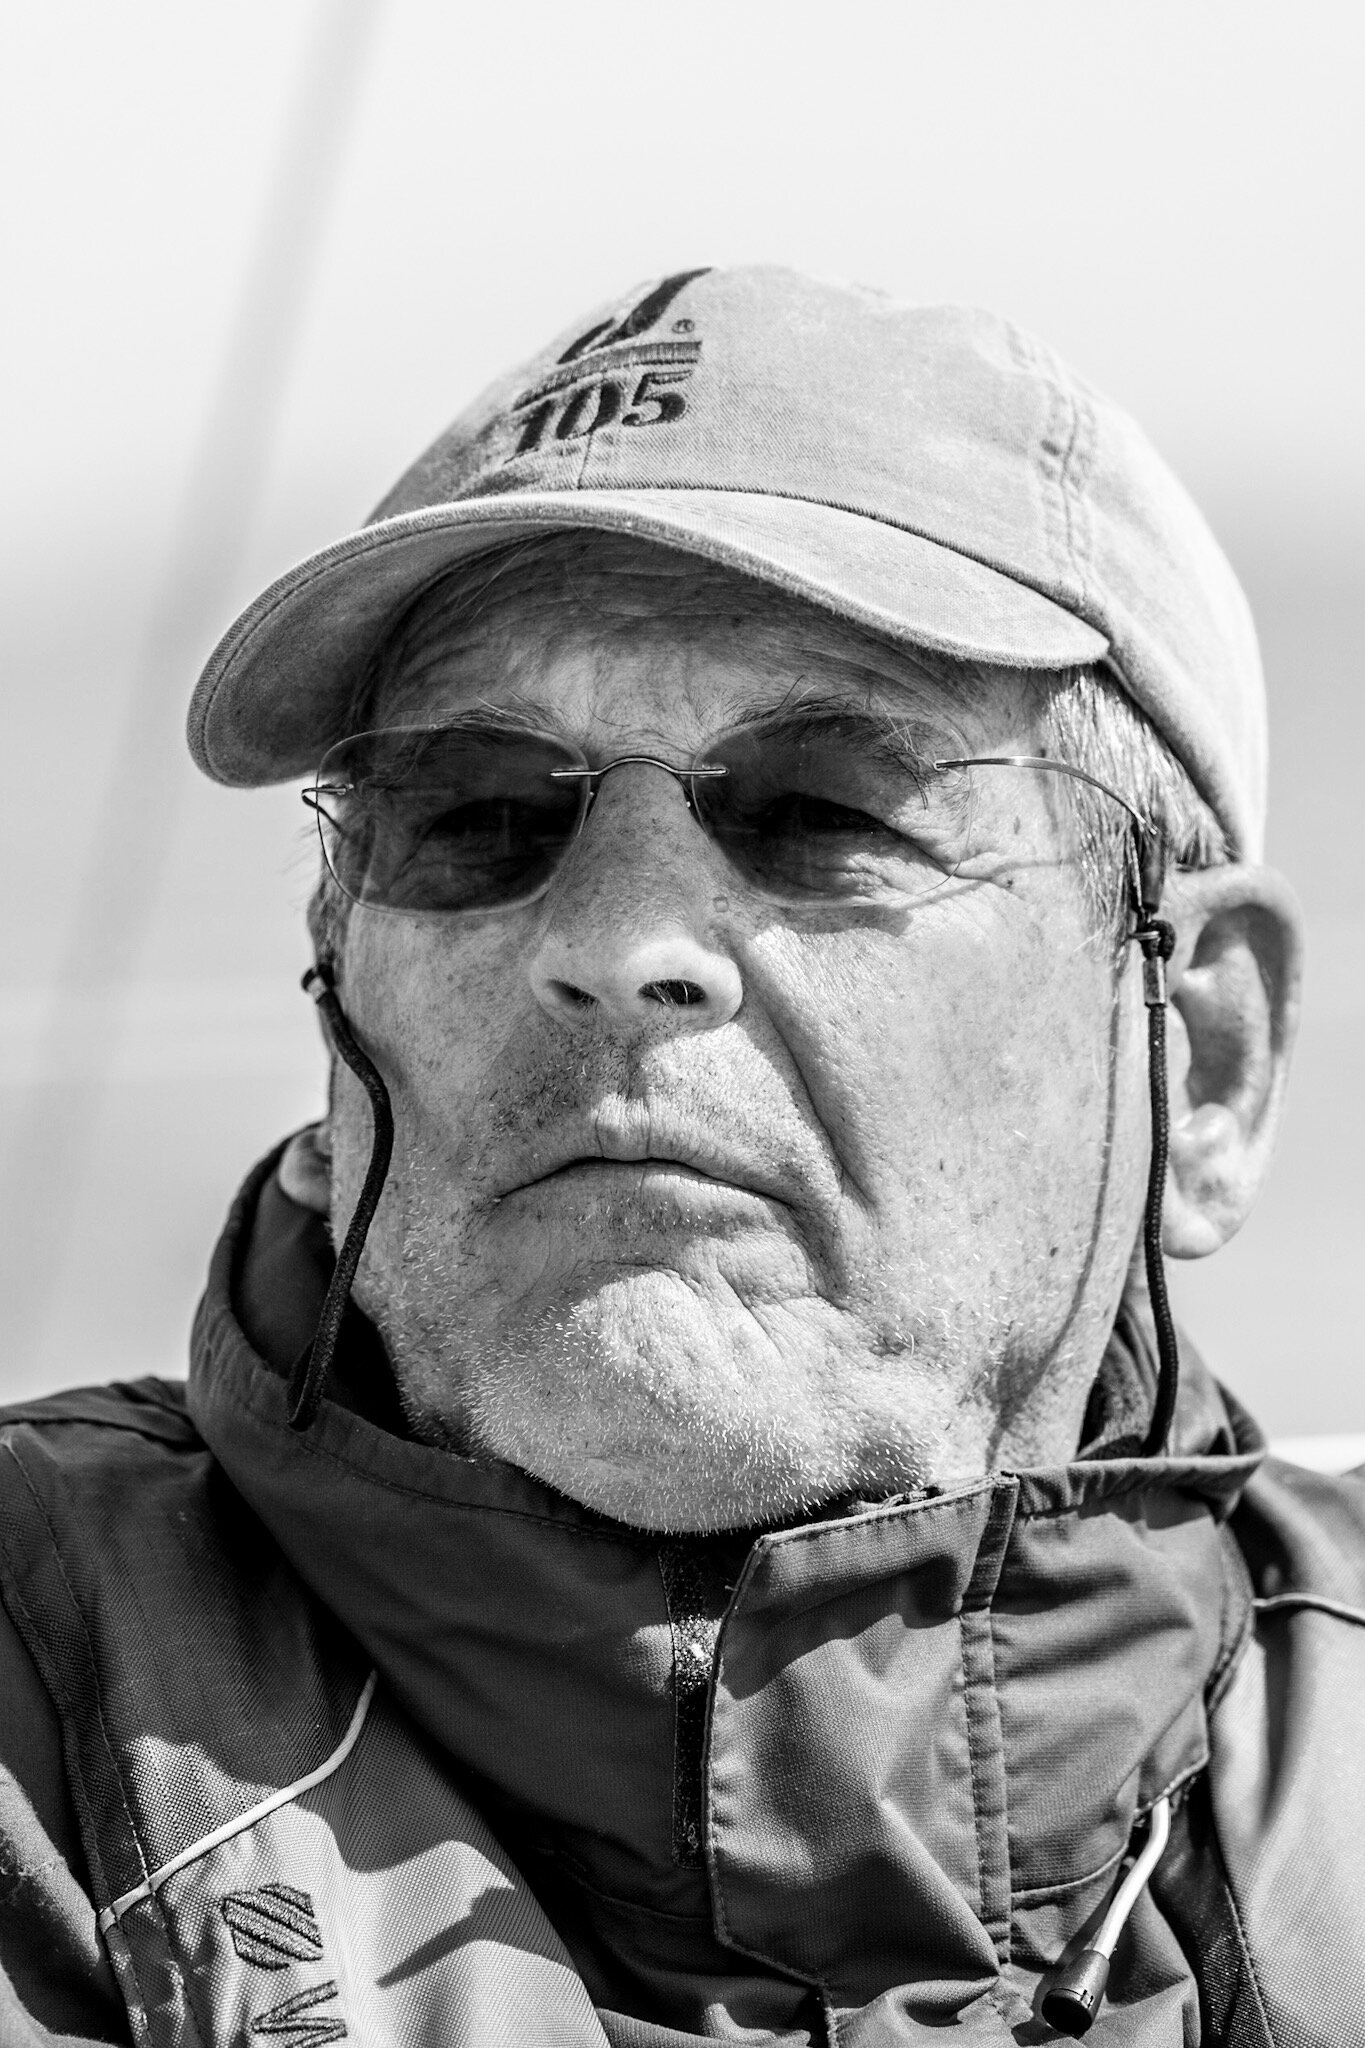  Our skipper, Dick Maclay, on Yellowfin 